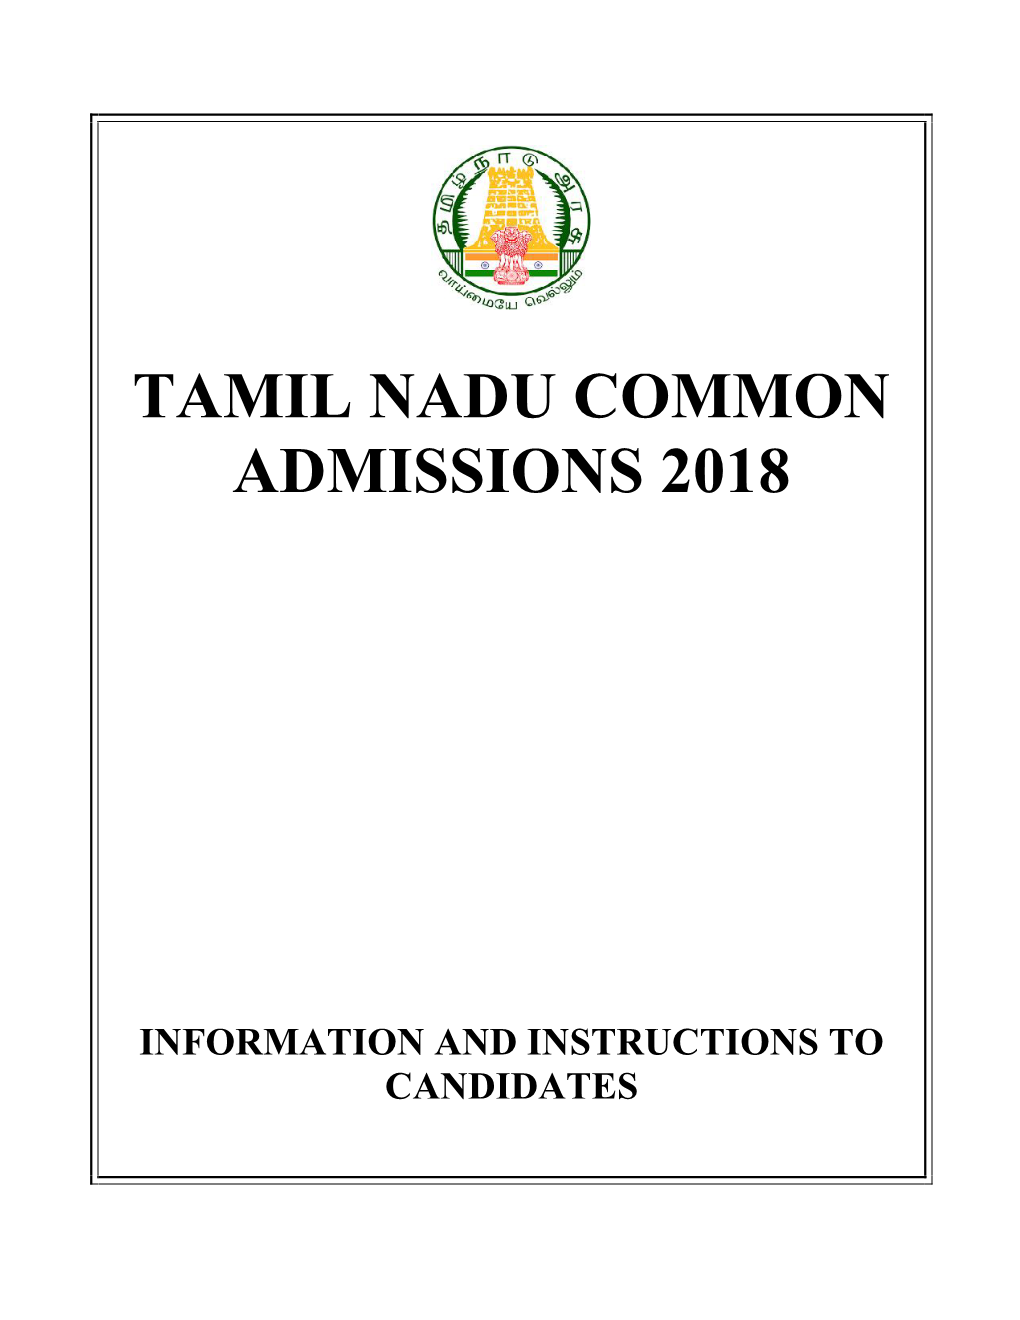 Tamil Nadu Common Admissions 2018